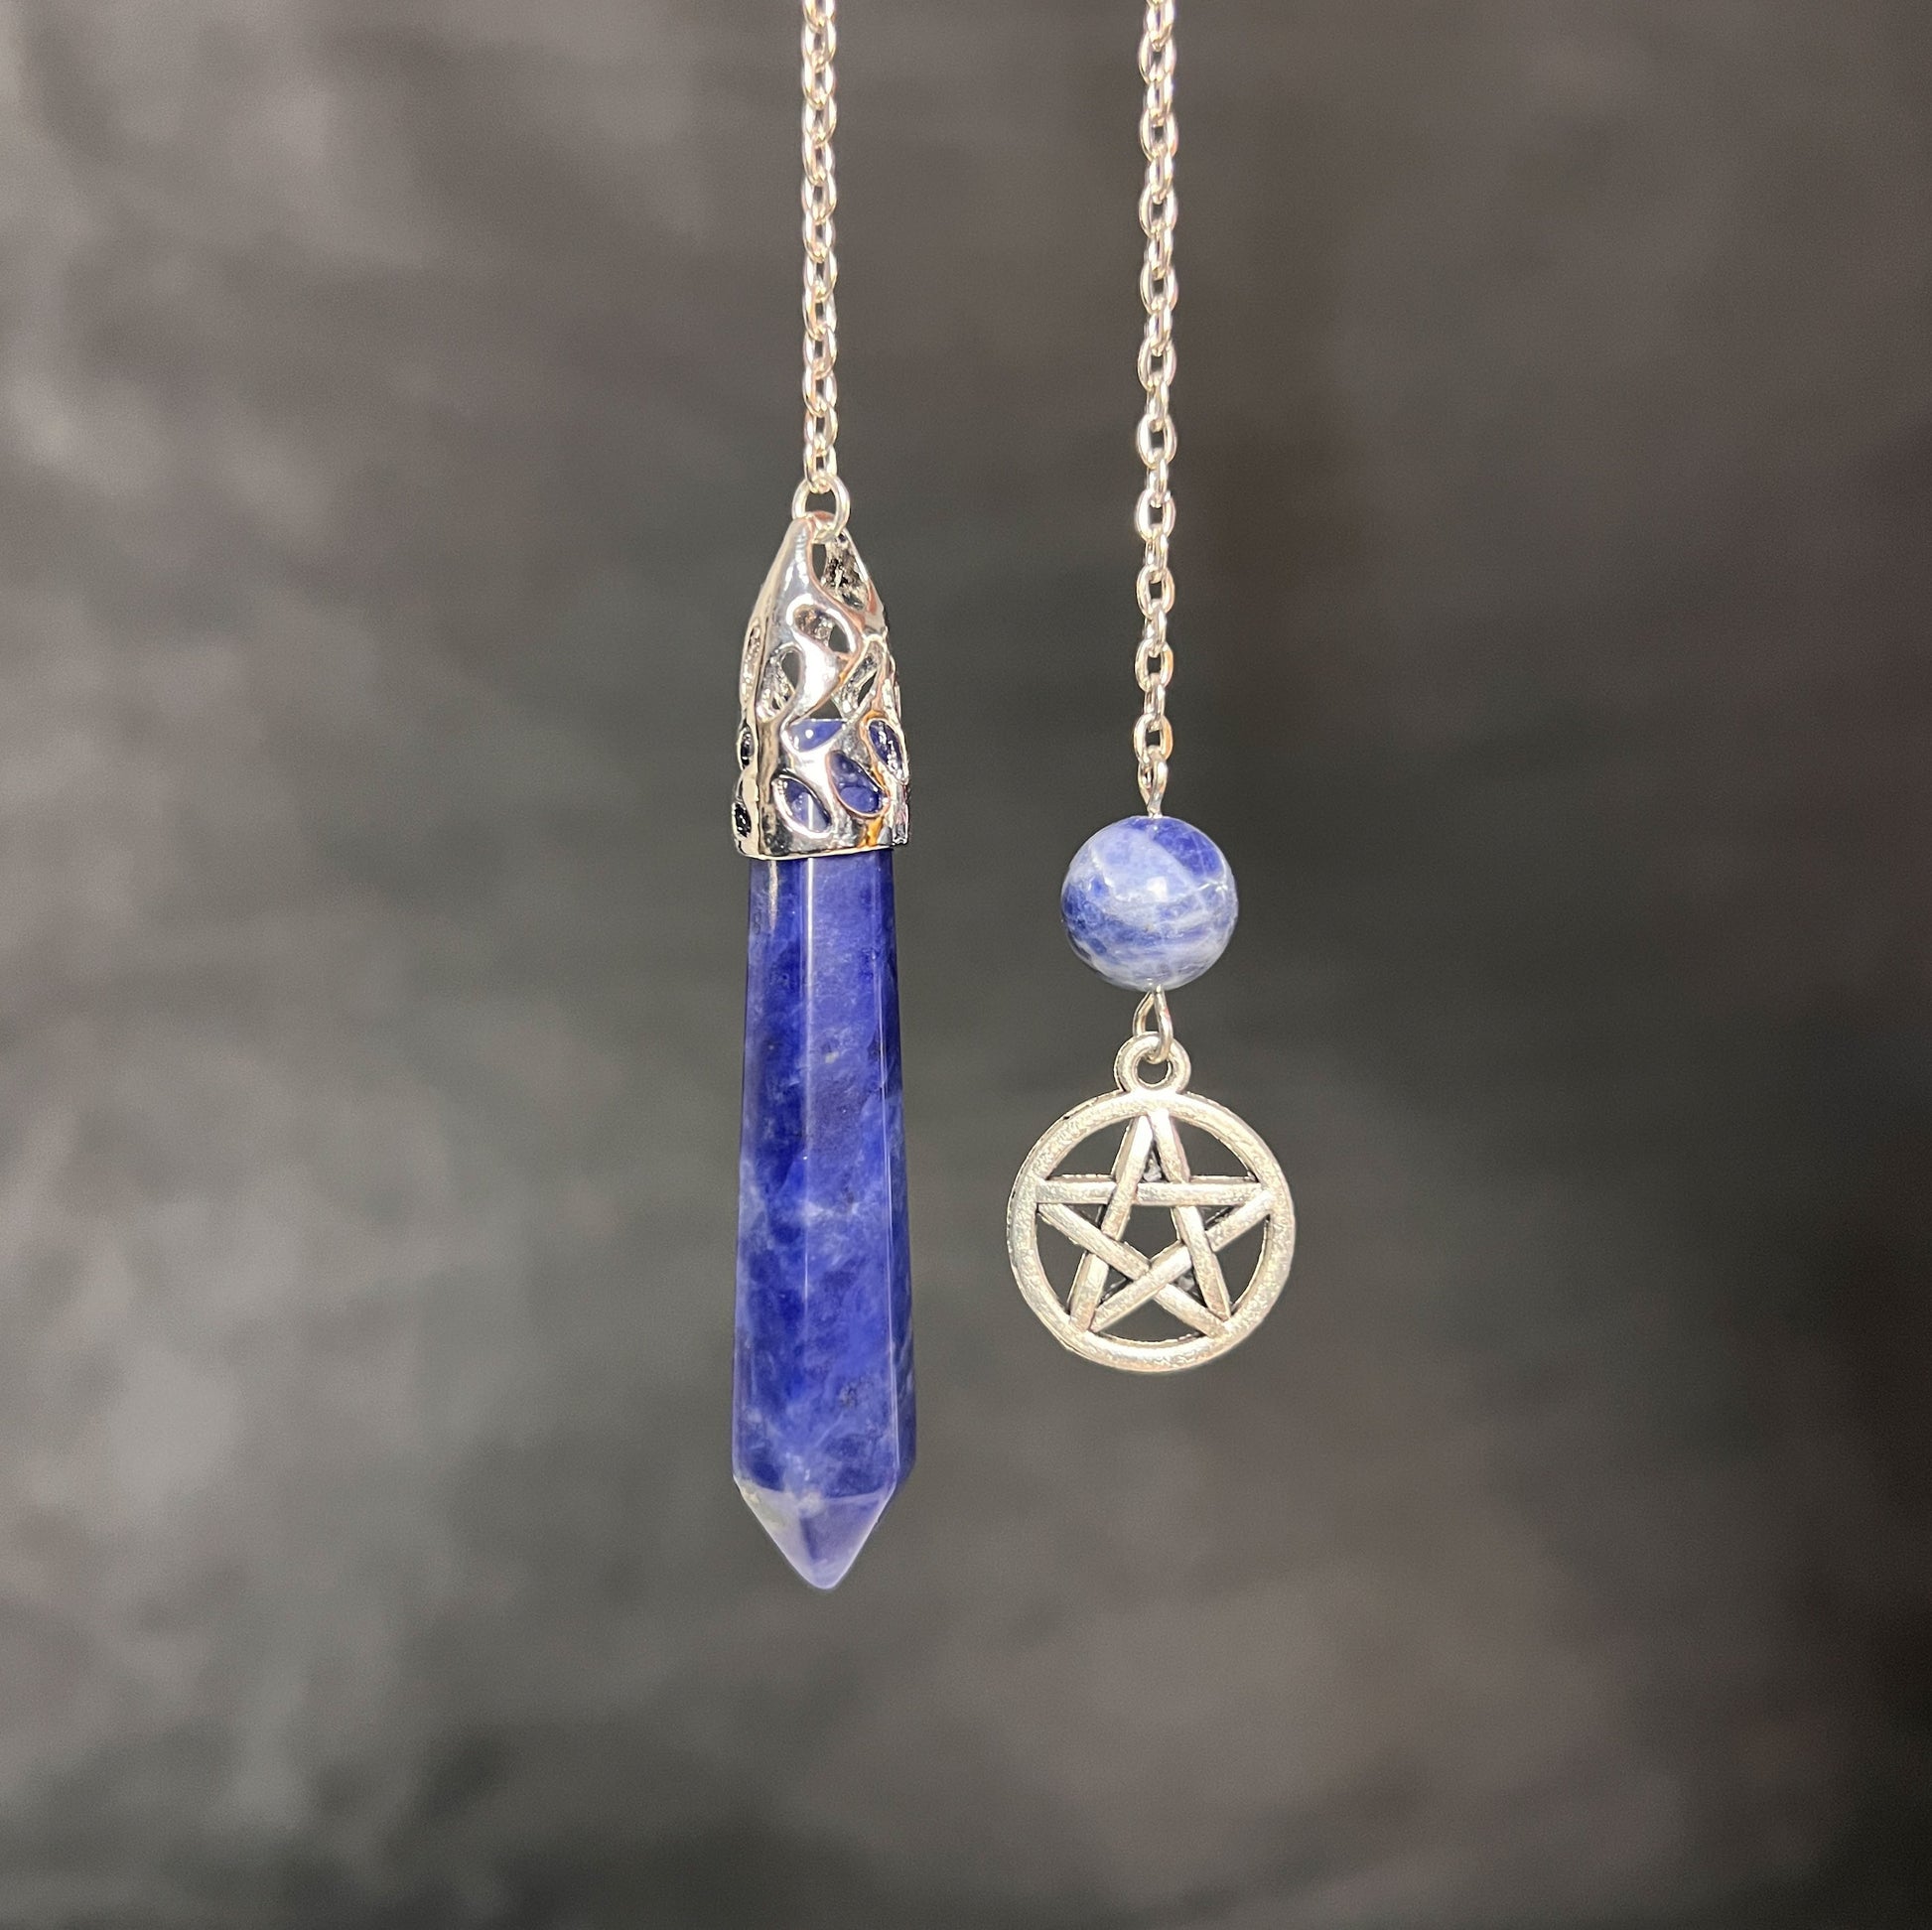 Crystal pendulum Sodalite gemstone and pagan pentacle dowsing tool sodalite pendulum for divination